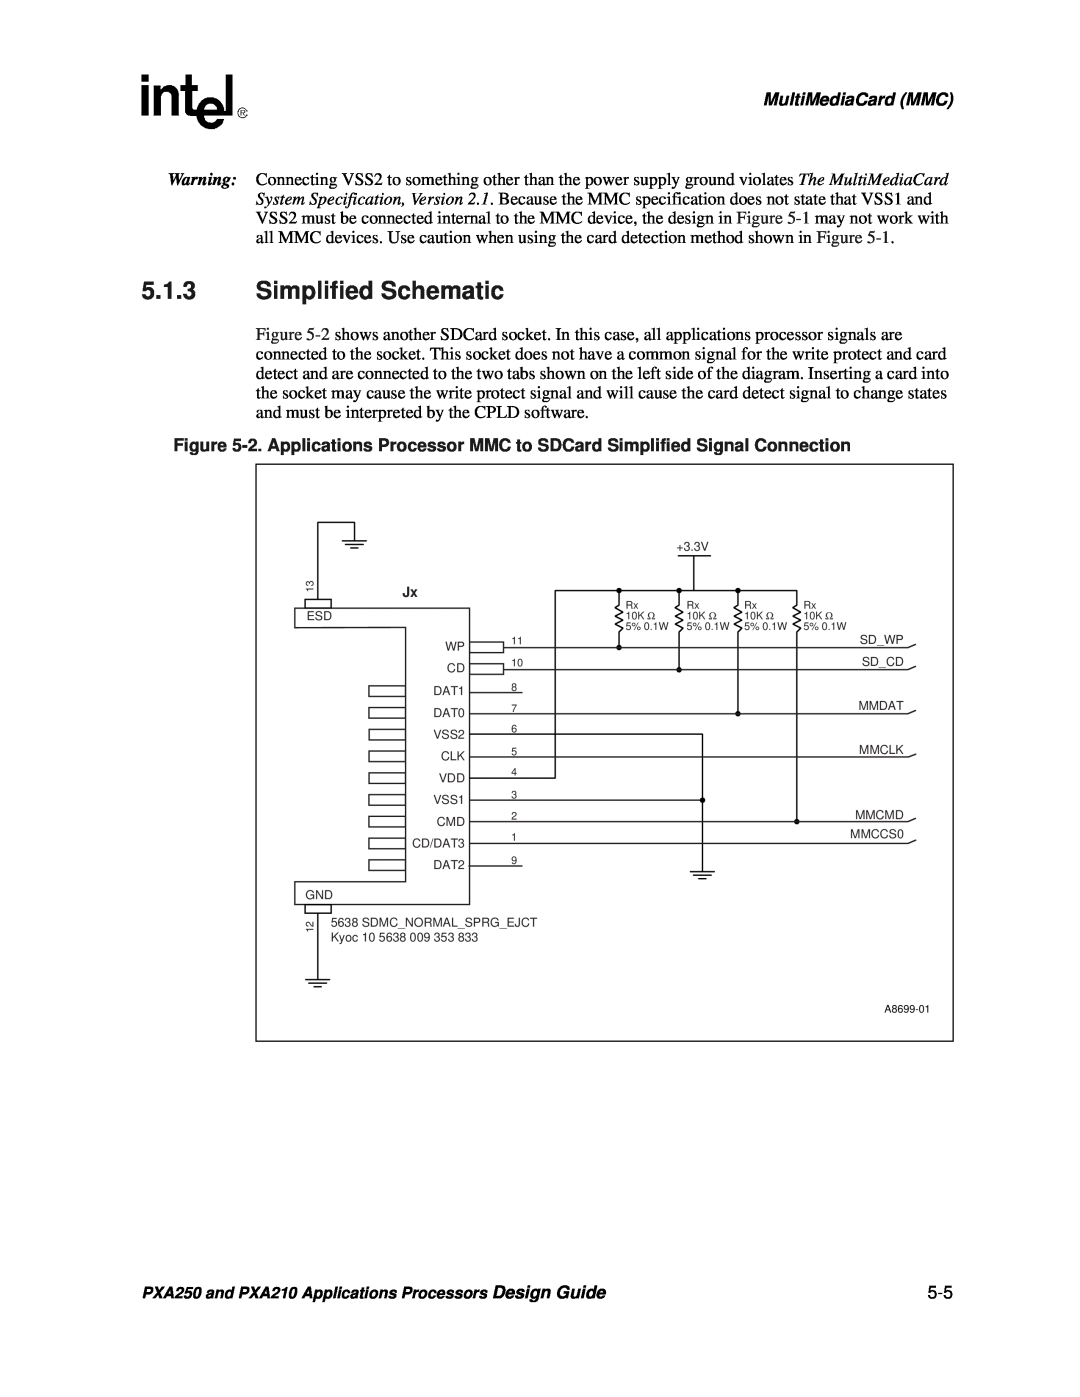 Intel PXA250 and PXA210 manual Simplified Schematic, MultiMediaCard MMC 